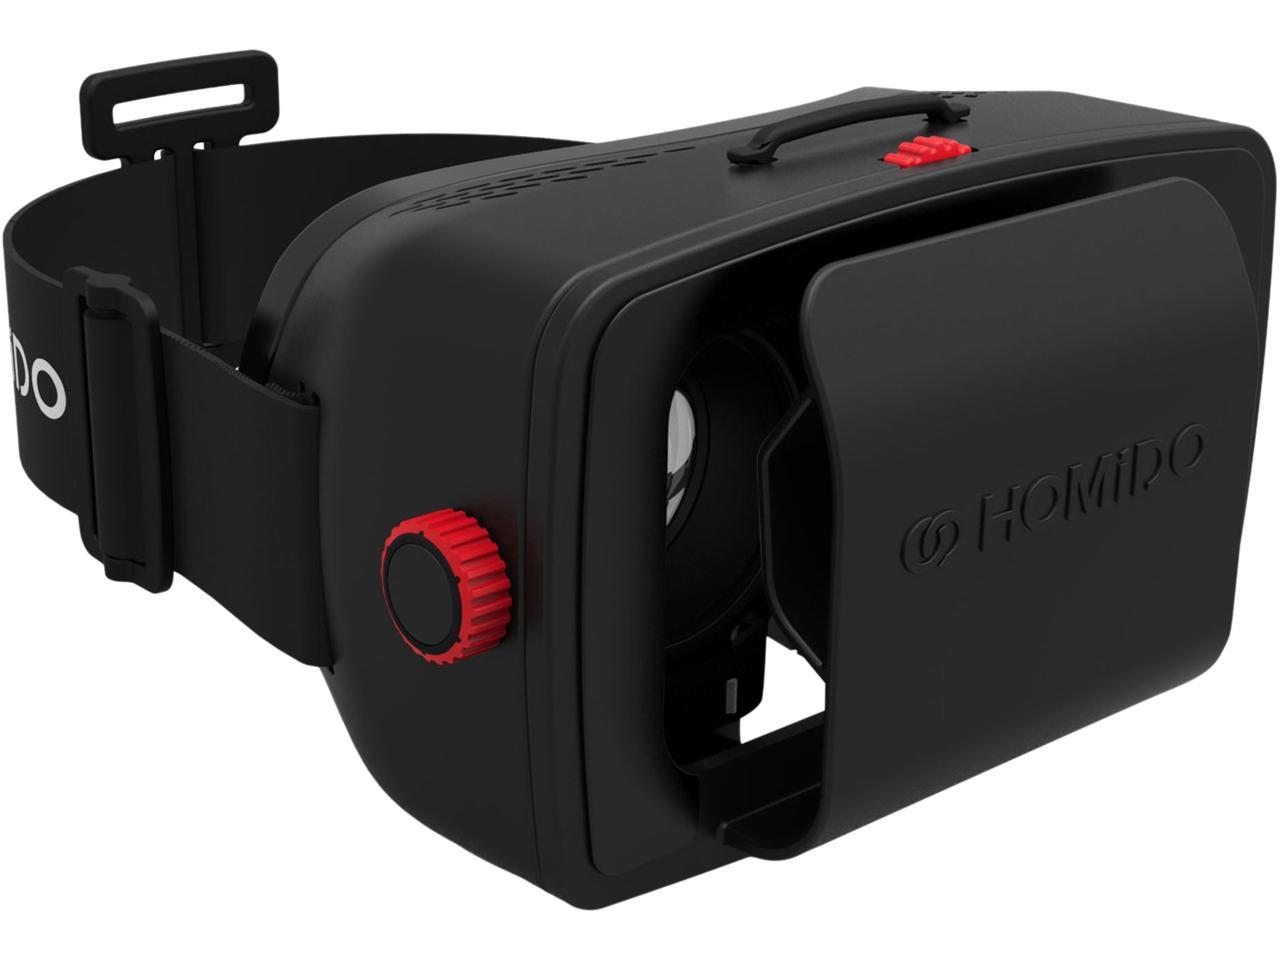 Homido Virtual Reality Headset for Smartphone